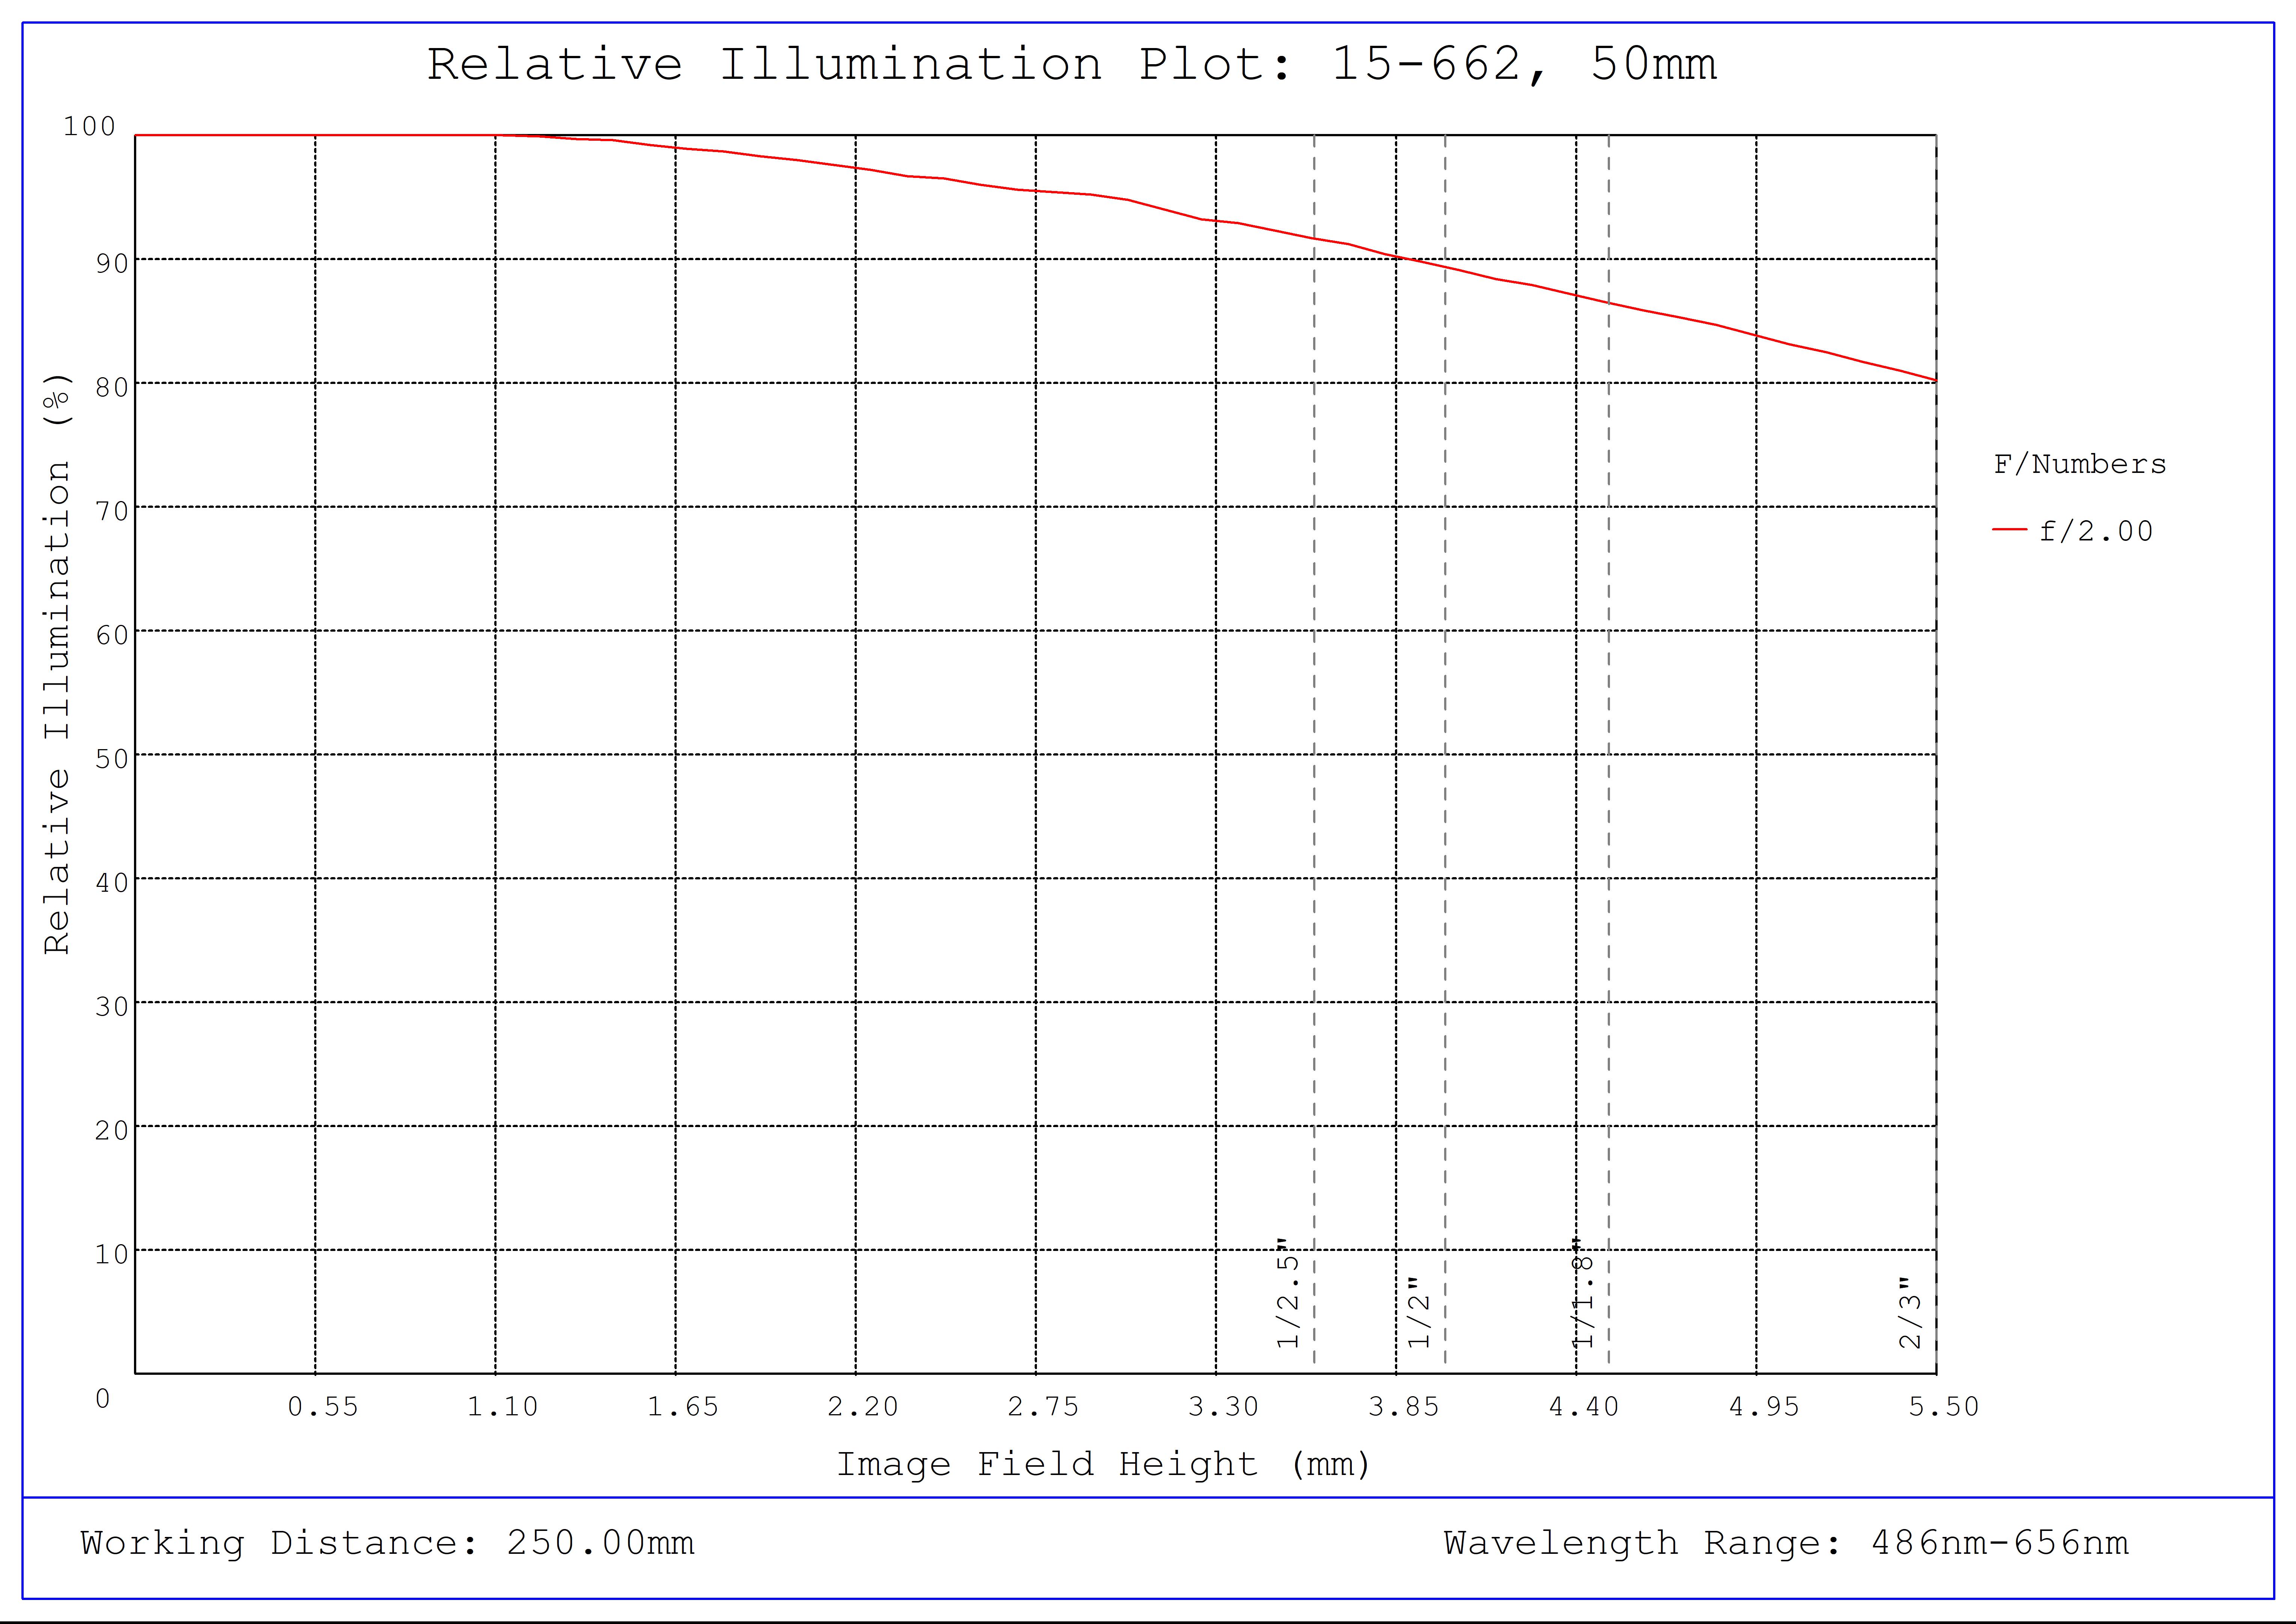 #15-662, 50mm, f/2.0 Sealed Cw Series Fixed Focal Length Lens, Relative Illumination Plot